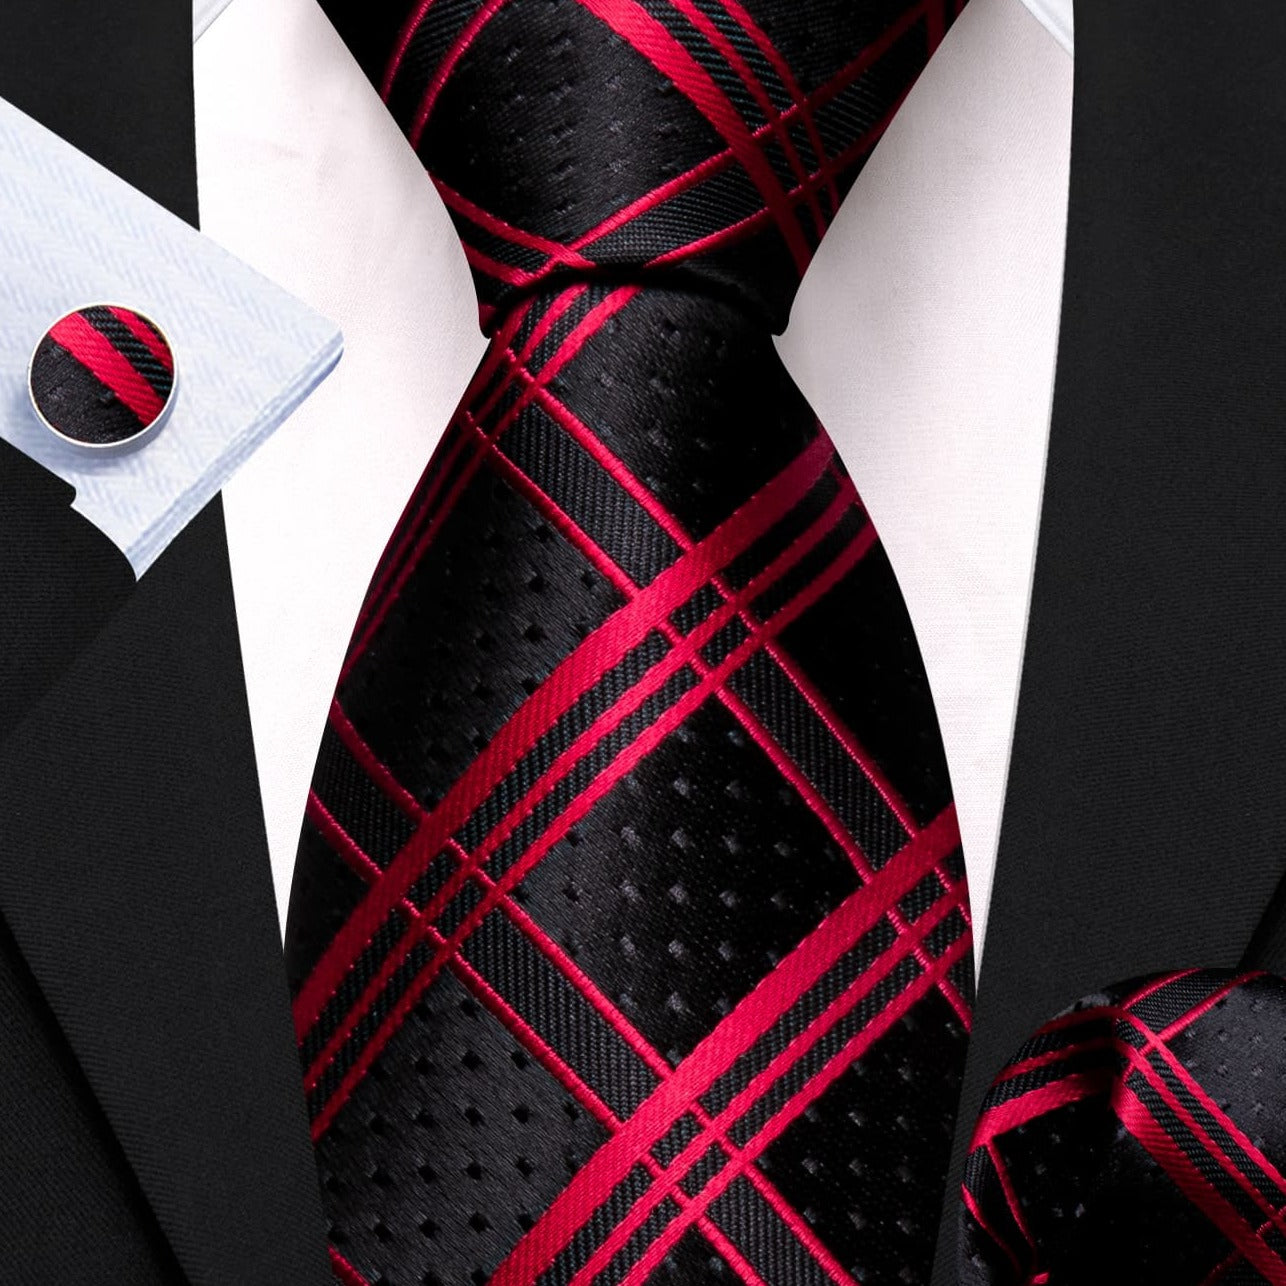  Black Tie Red Pinstripes Jacquard Men's Striped Necktie Set